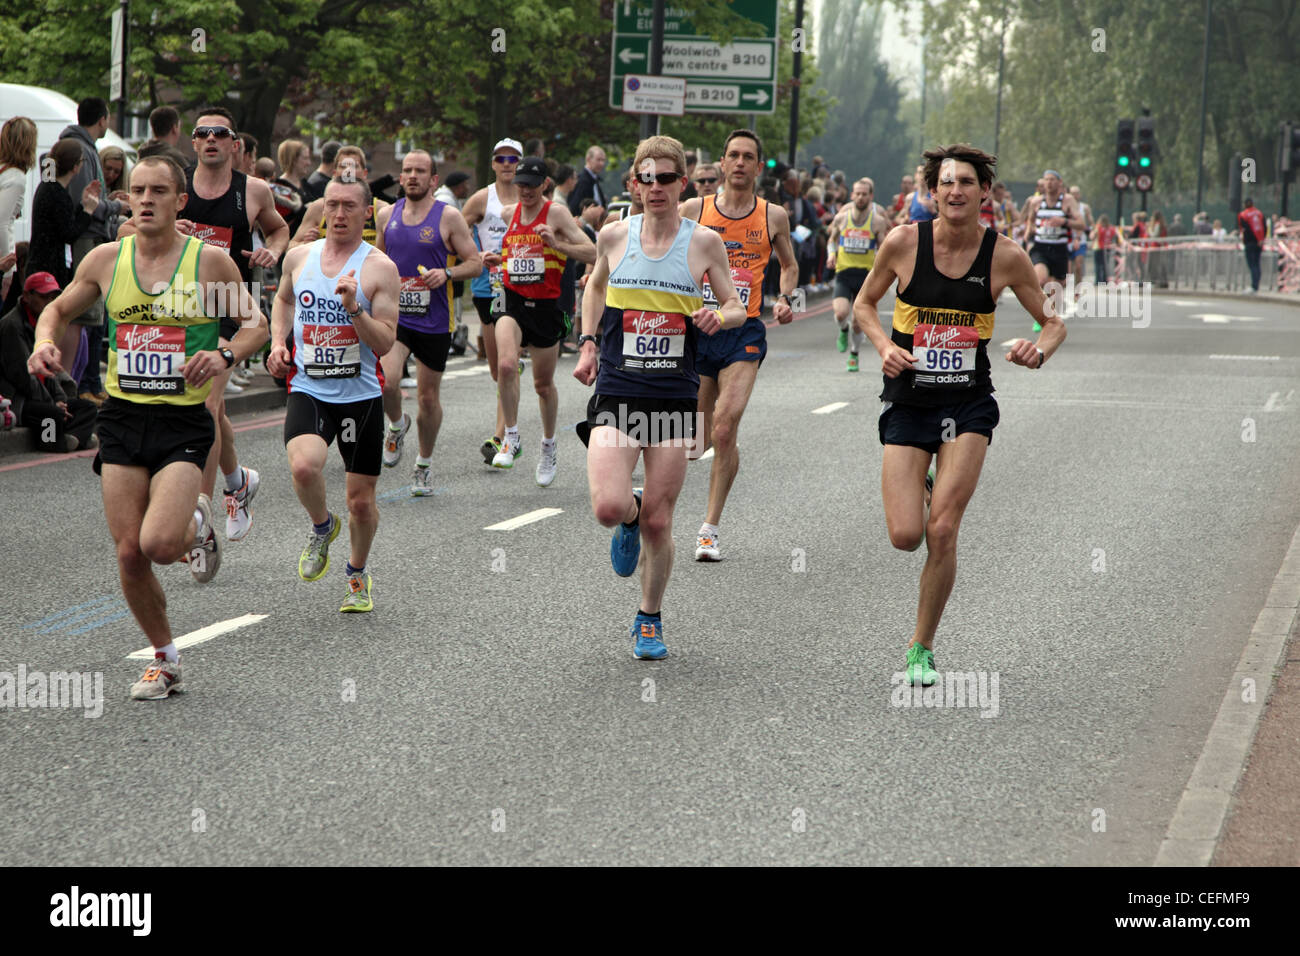 Elite runners running in the 2011 Virgin London marathon Stock Photo